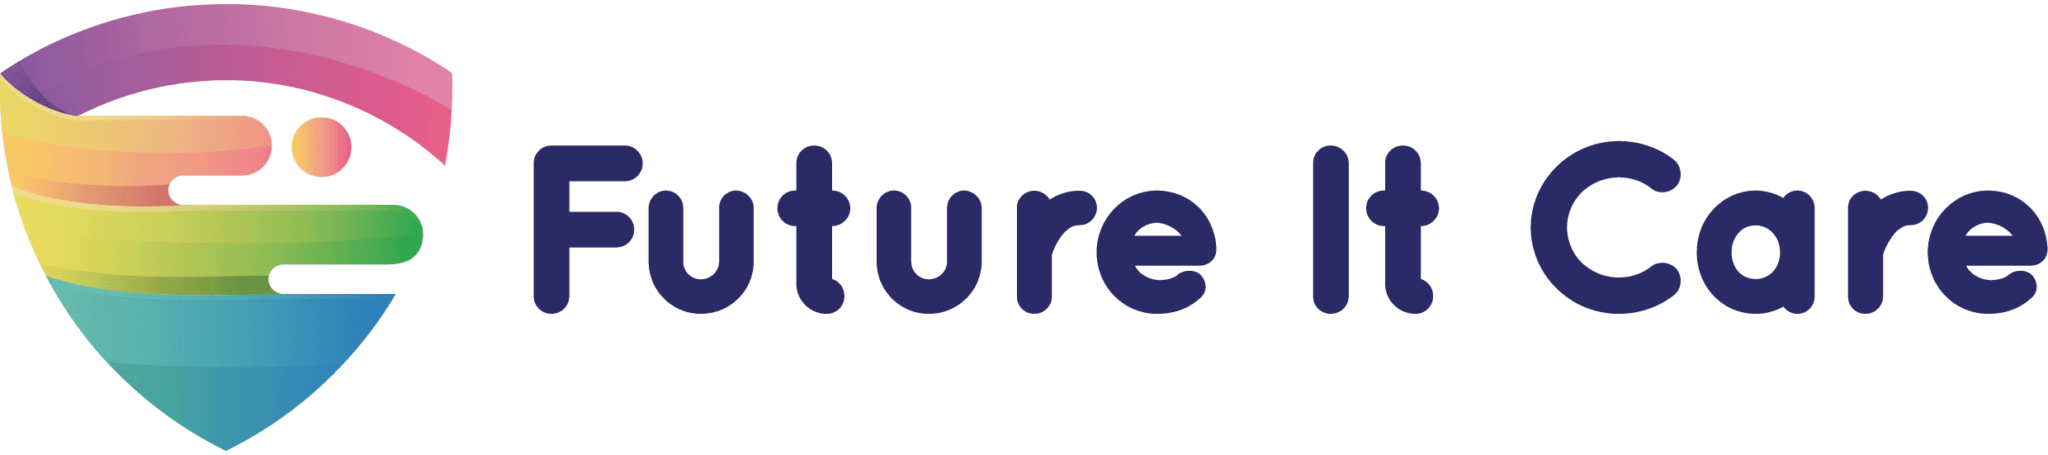 Future It Care logo